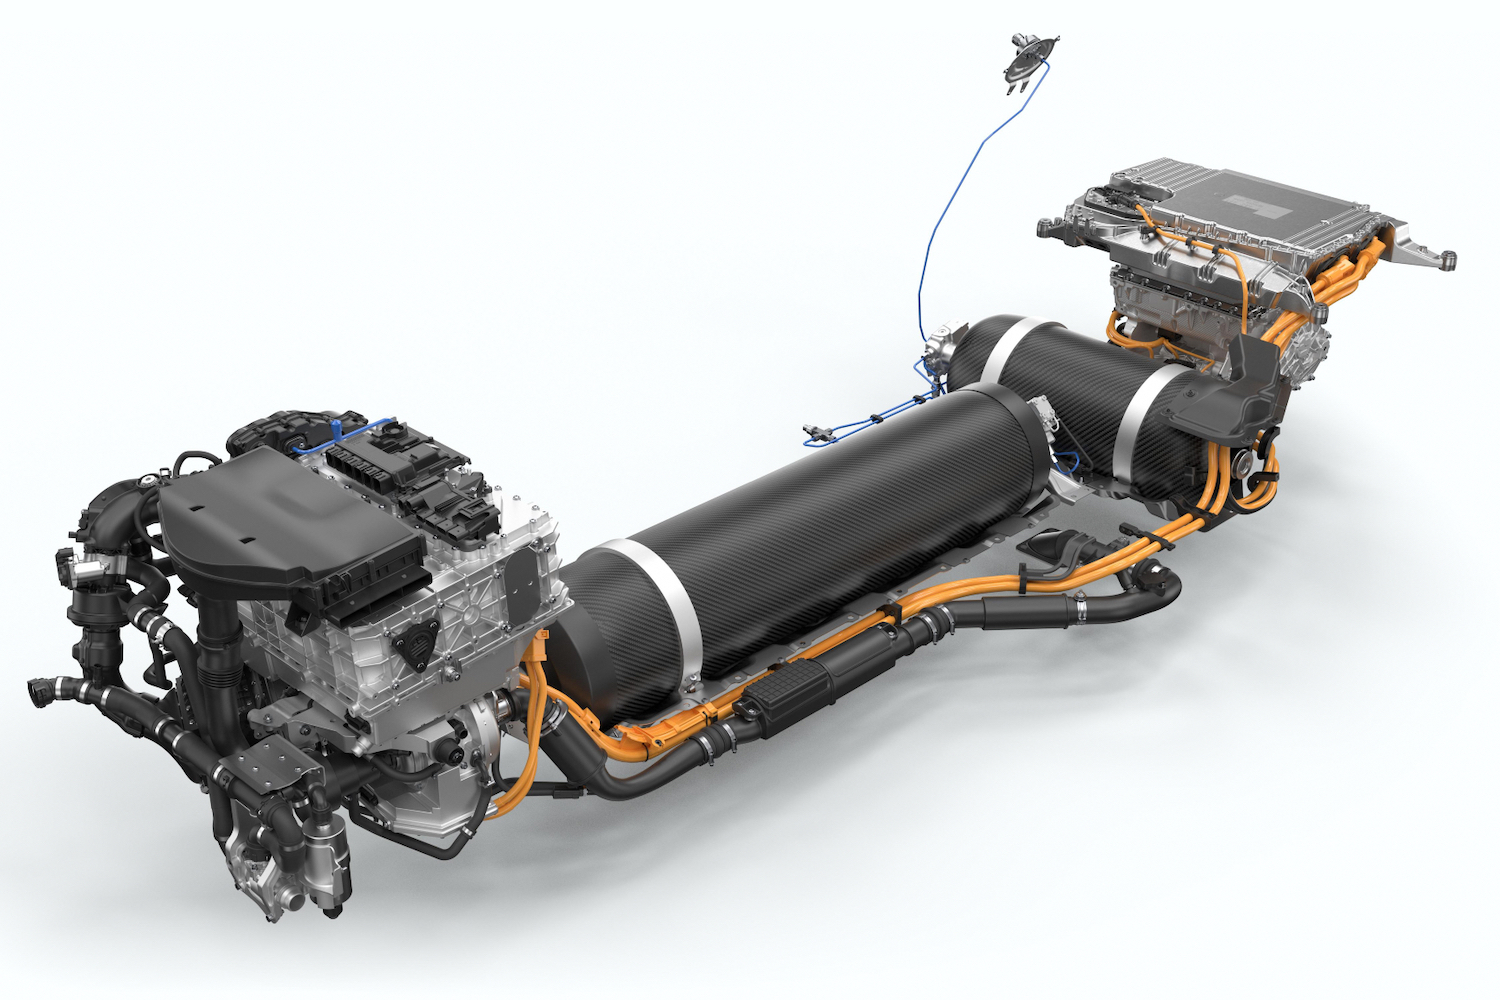 BMW iX5 Hydrogen view of hydrogen fuel-cell powertrain inside the SUV.